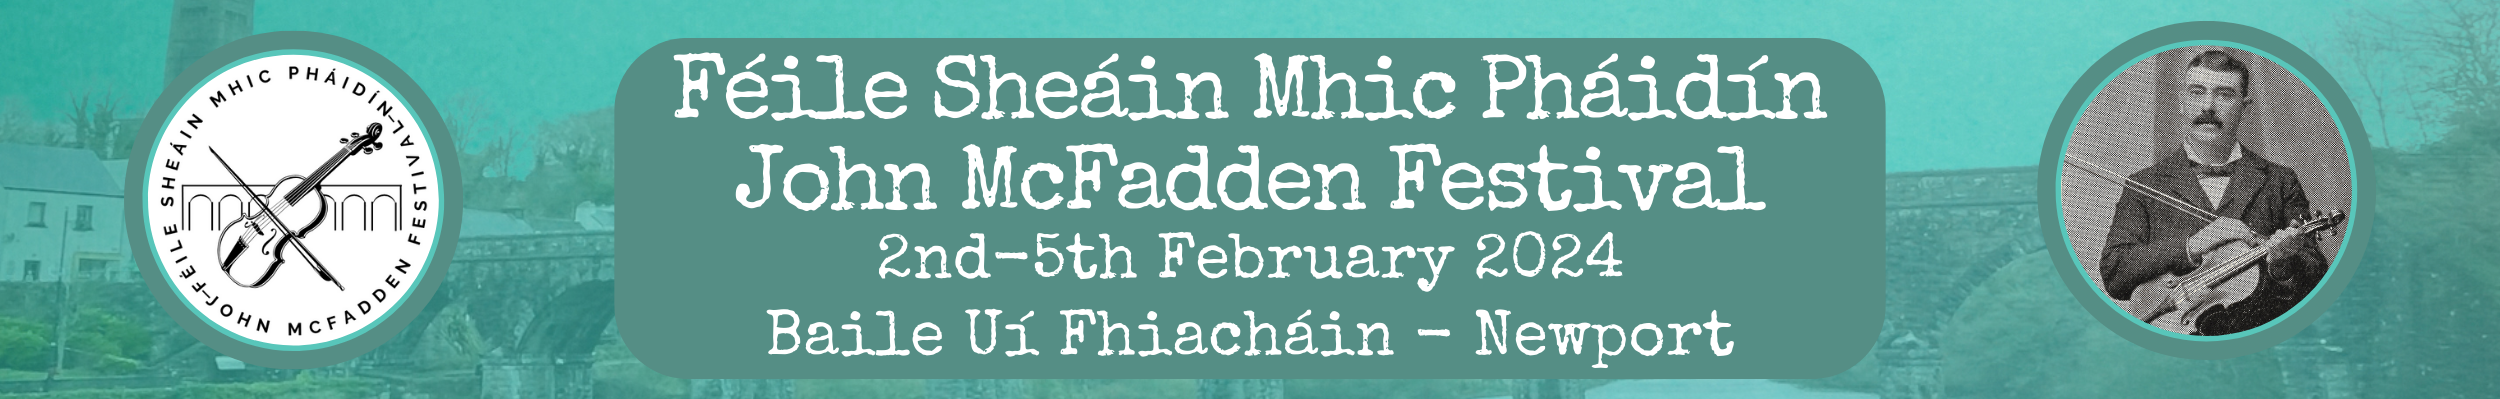 John Mc Fadden Festival